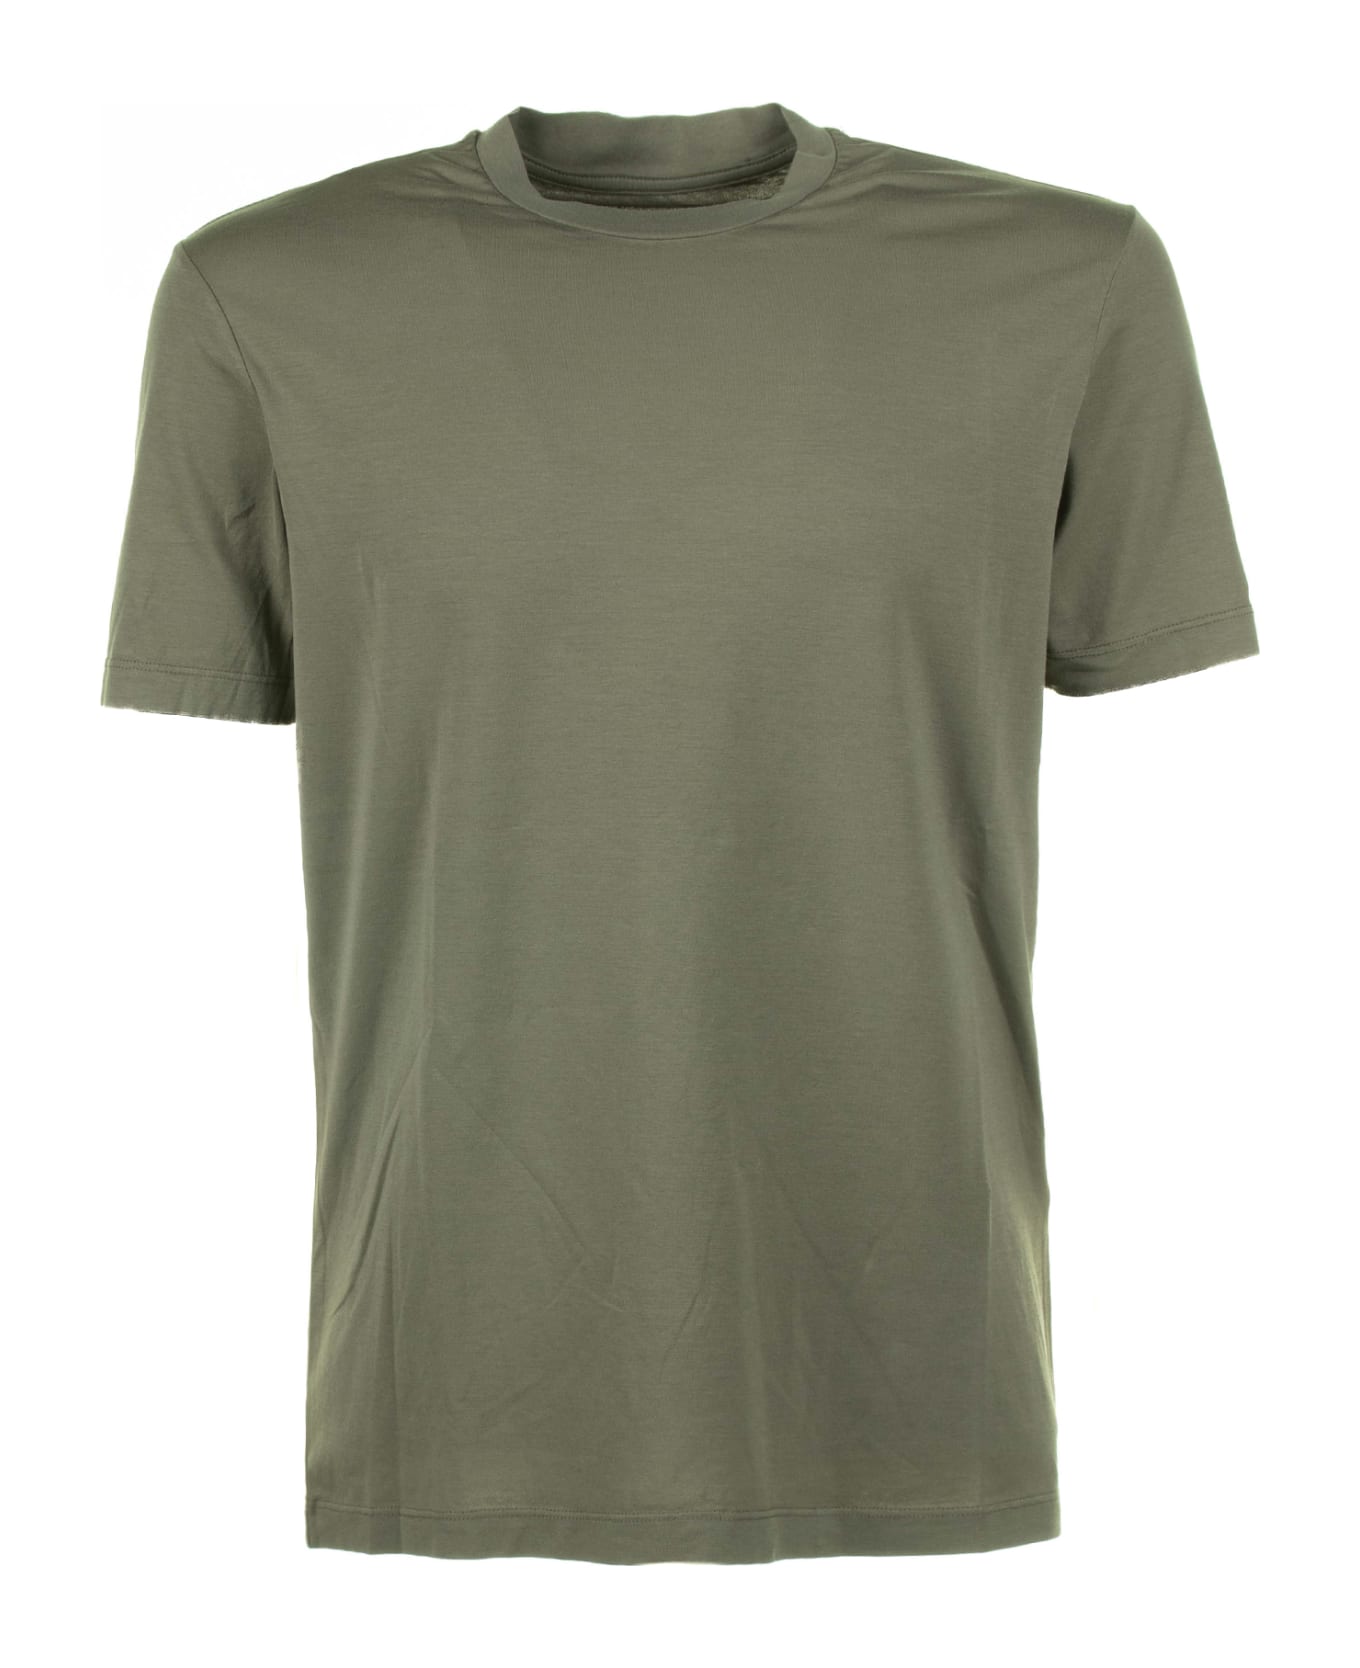 Altea Military Green Cotton T-shirt - MILITARE